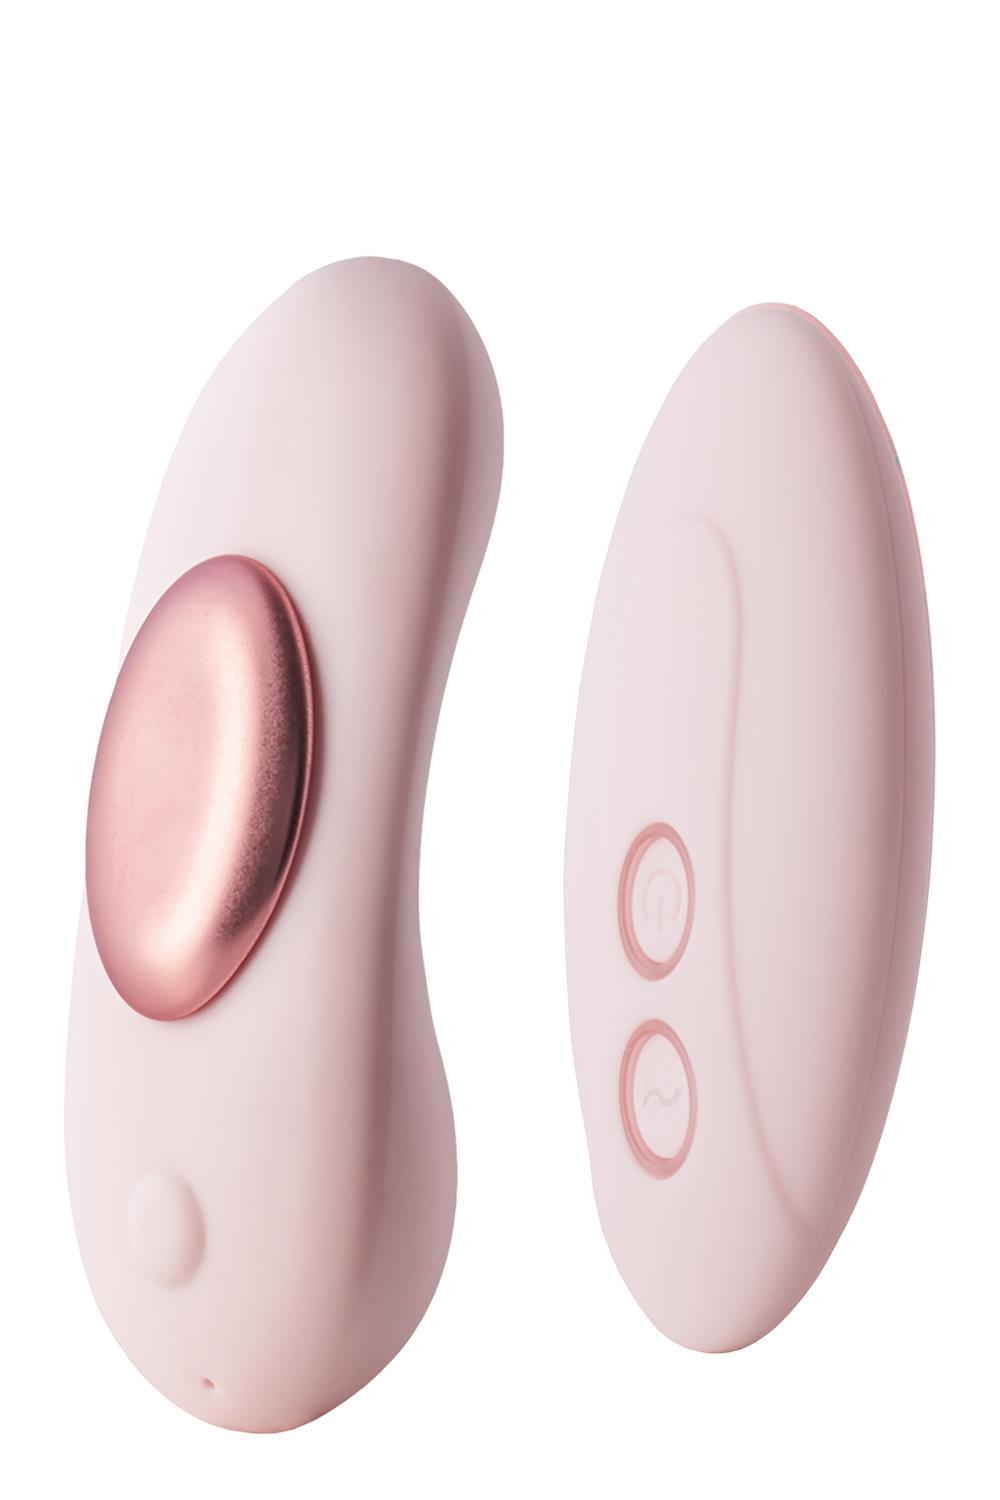 Gigi - Oplaadbare panty vibrator met afstandsbediening